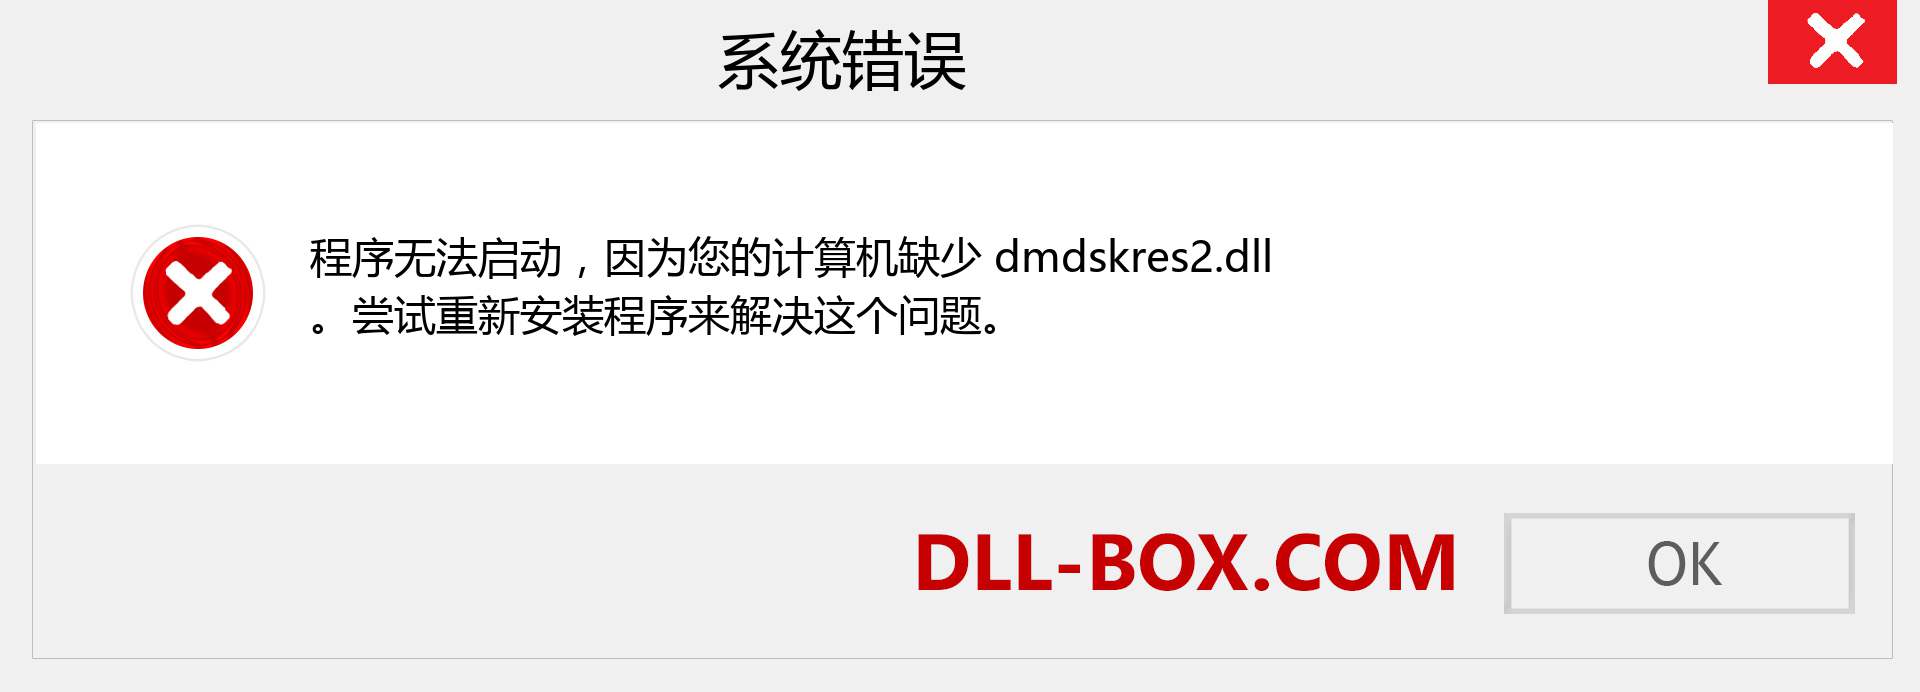 dmdskres2.dll 文件丢失？。 适用于 Windows 7、8、10 的下载 - 修复 Windows、照片、图像上的 dmdskres2 dll 丢失错误